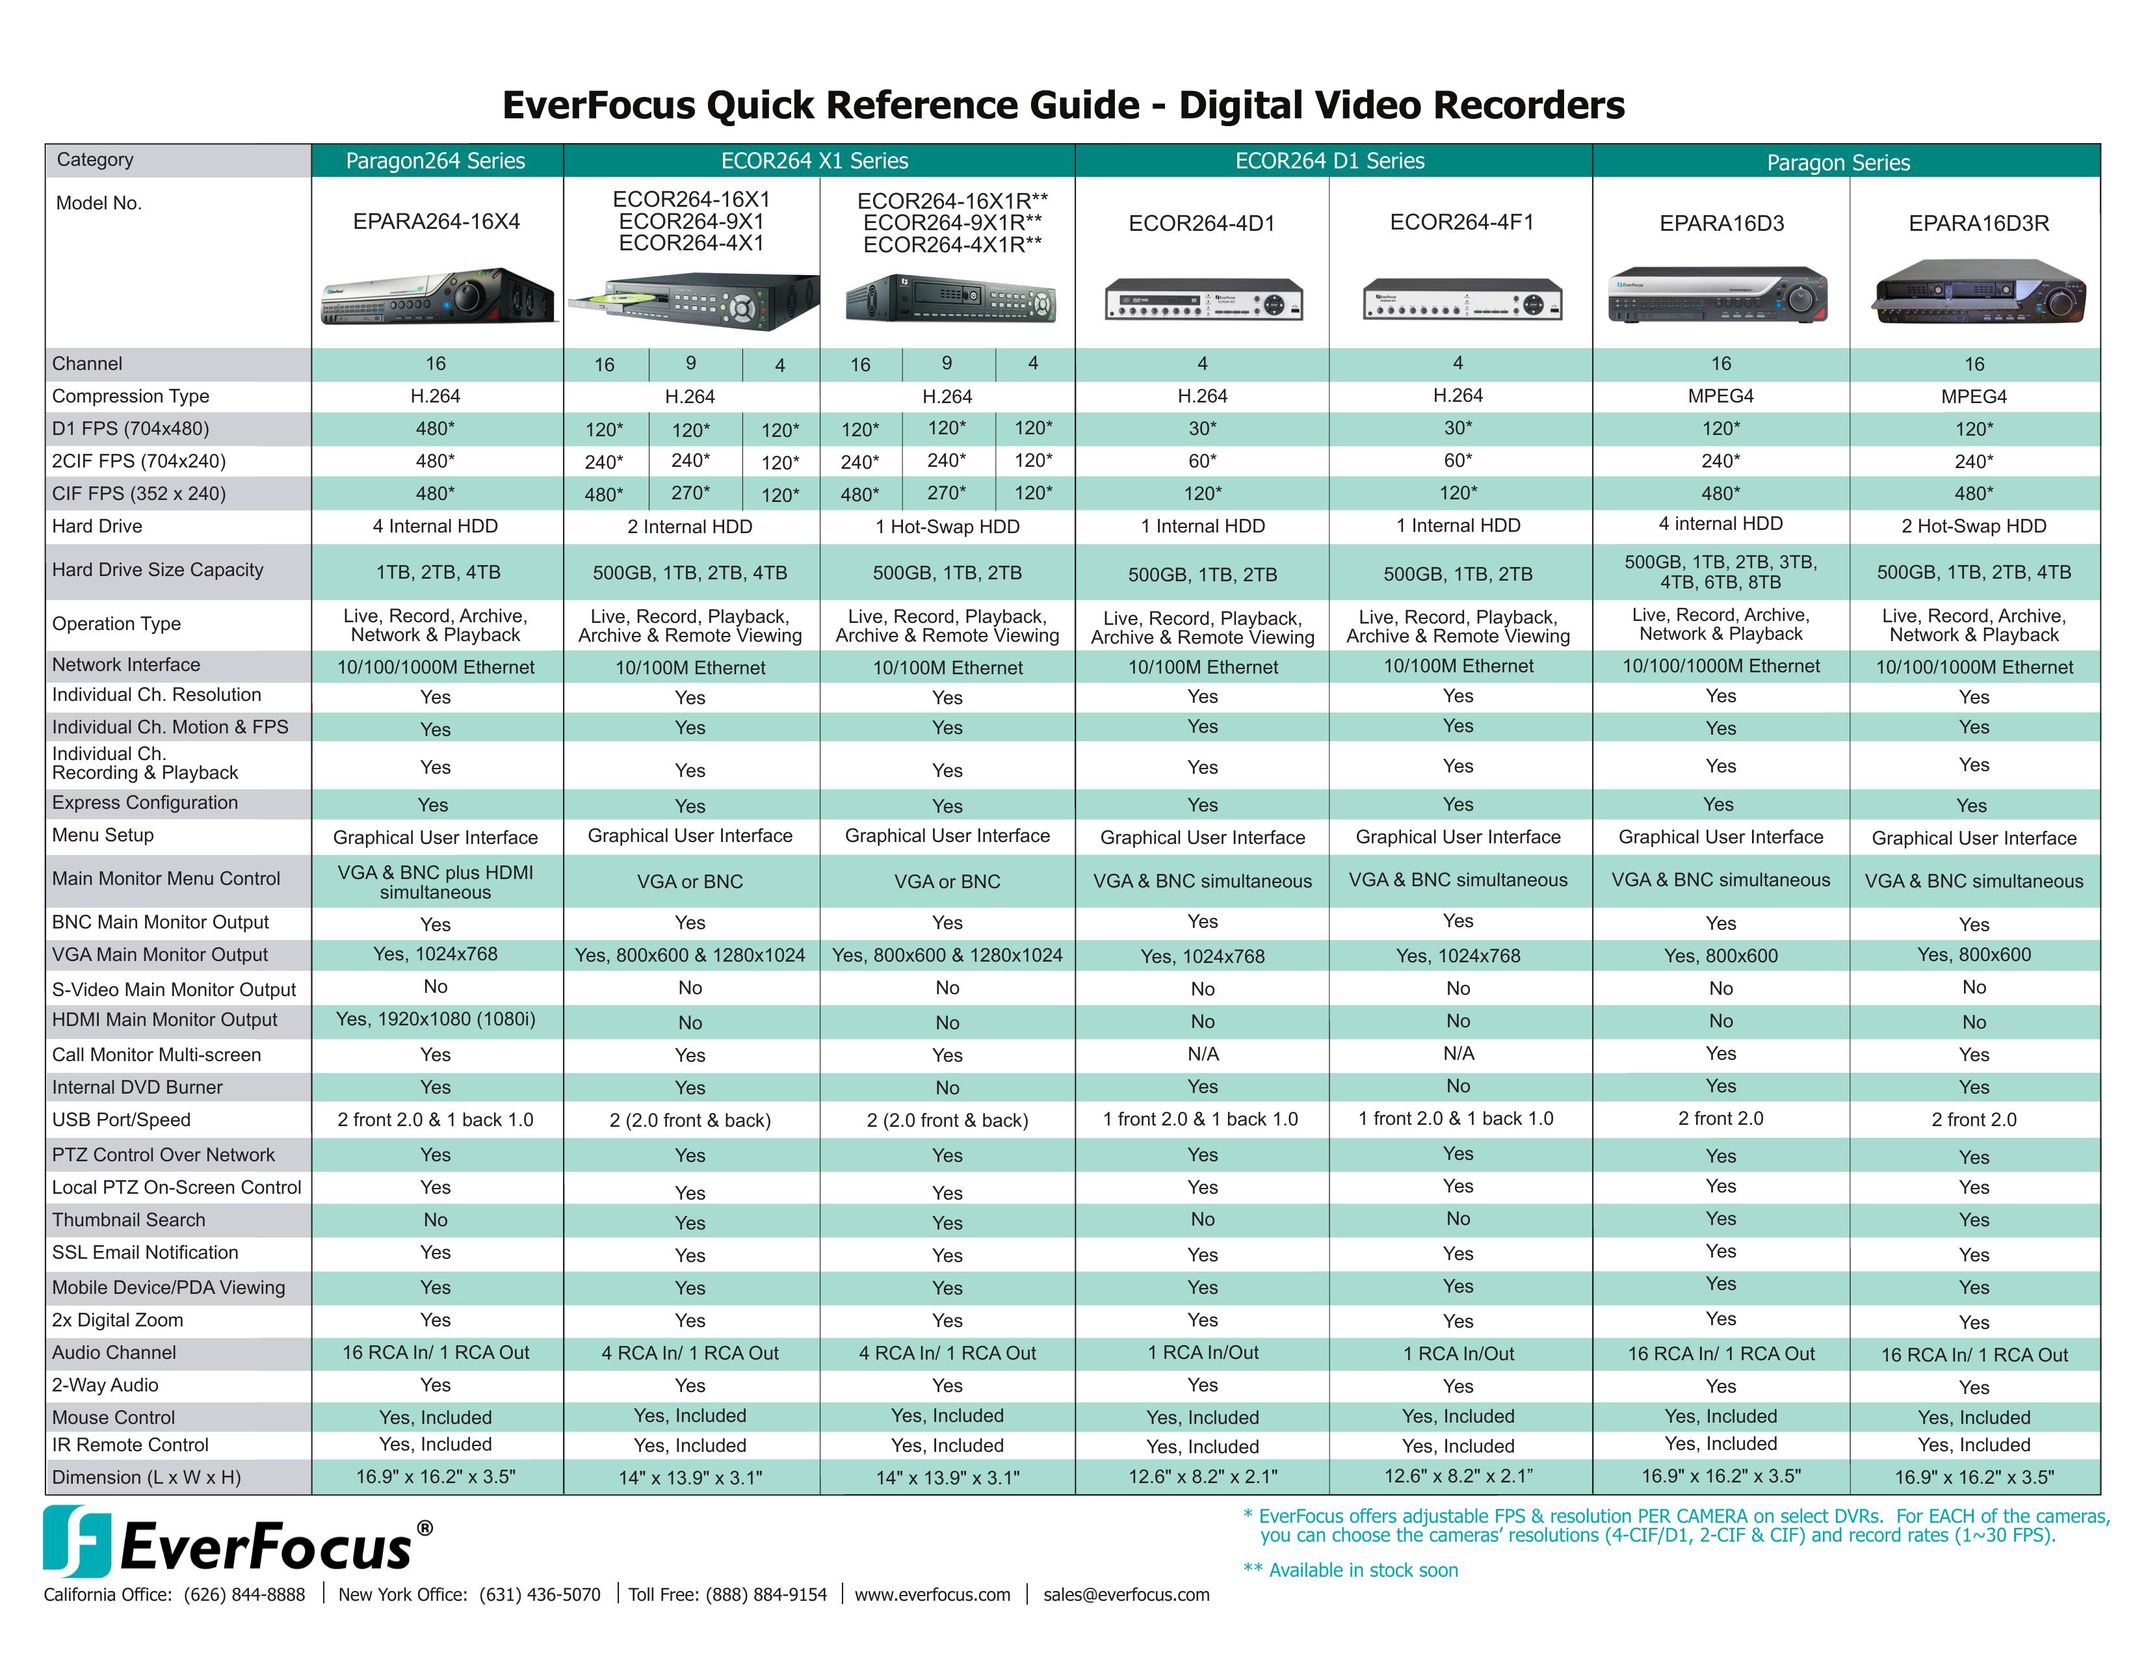 EverFocus ECOR264-16X1R DVR User Manual